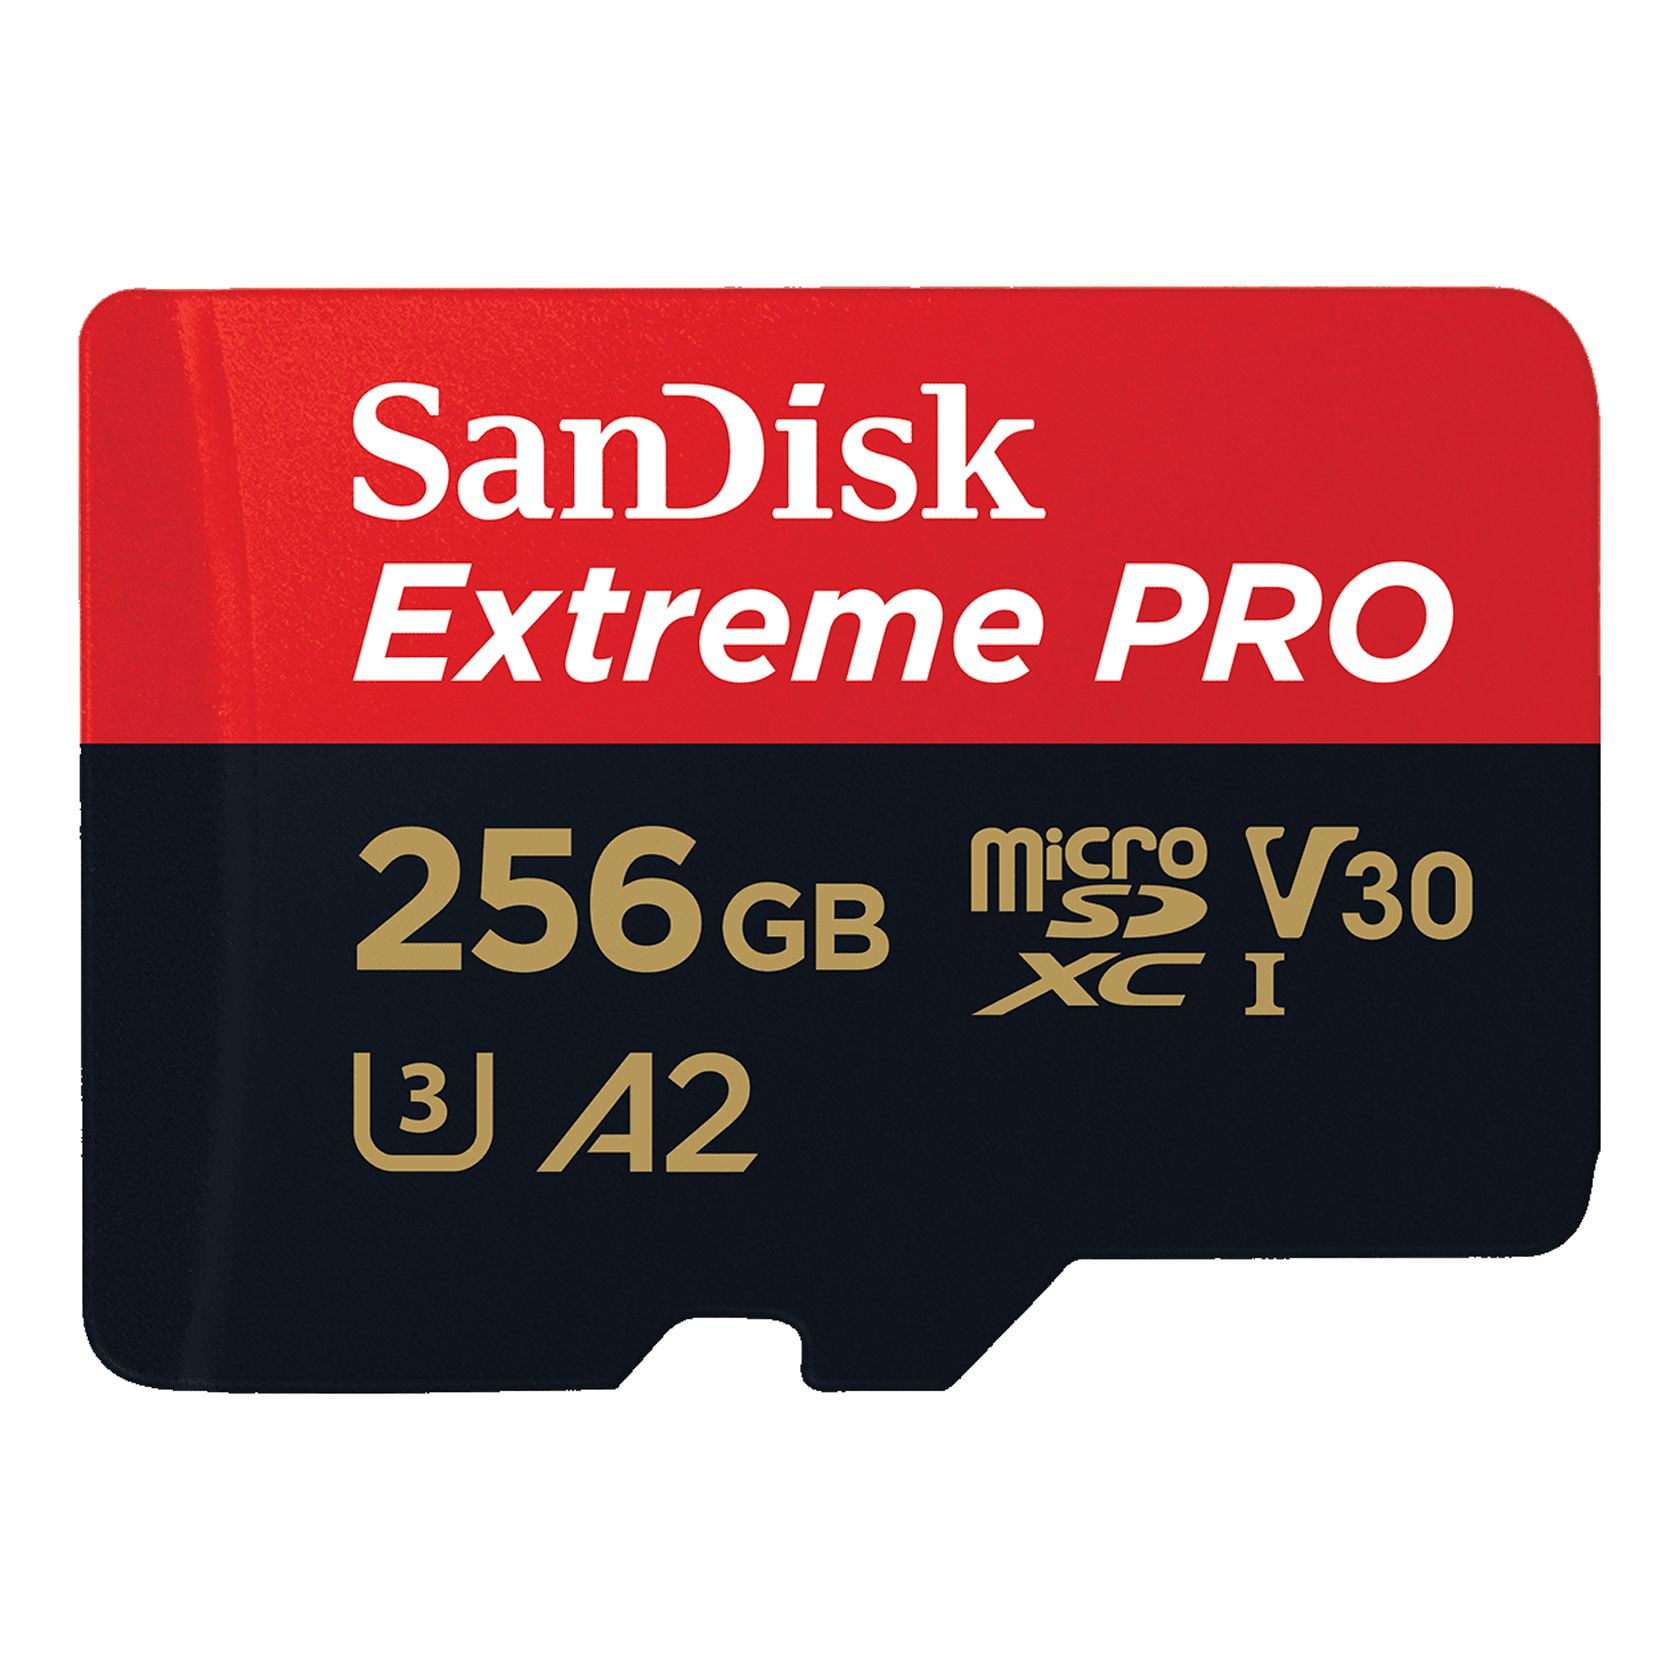 SanDisk 256GB ImageMate microSDXC UHS-I Memory Card - Up to 150MB/s -  SDSQUA4-256G-Aw6ka